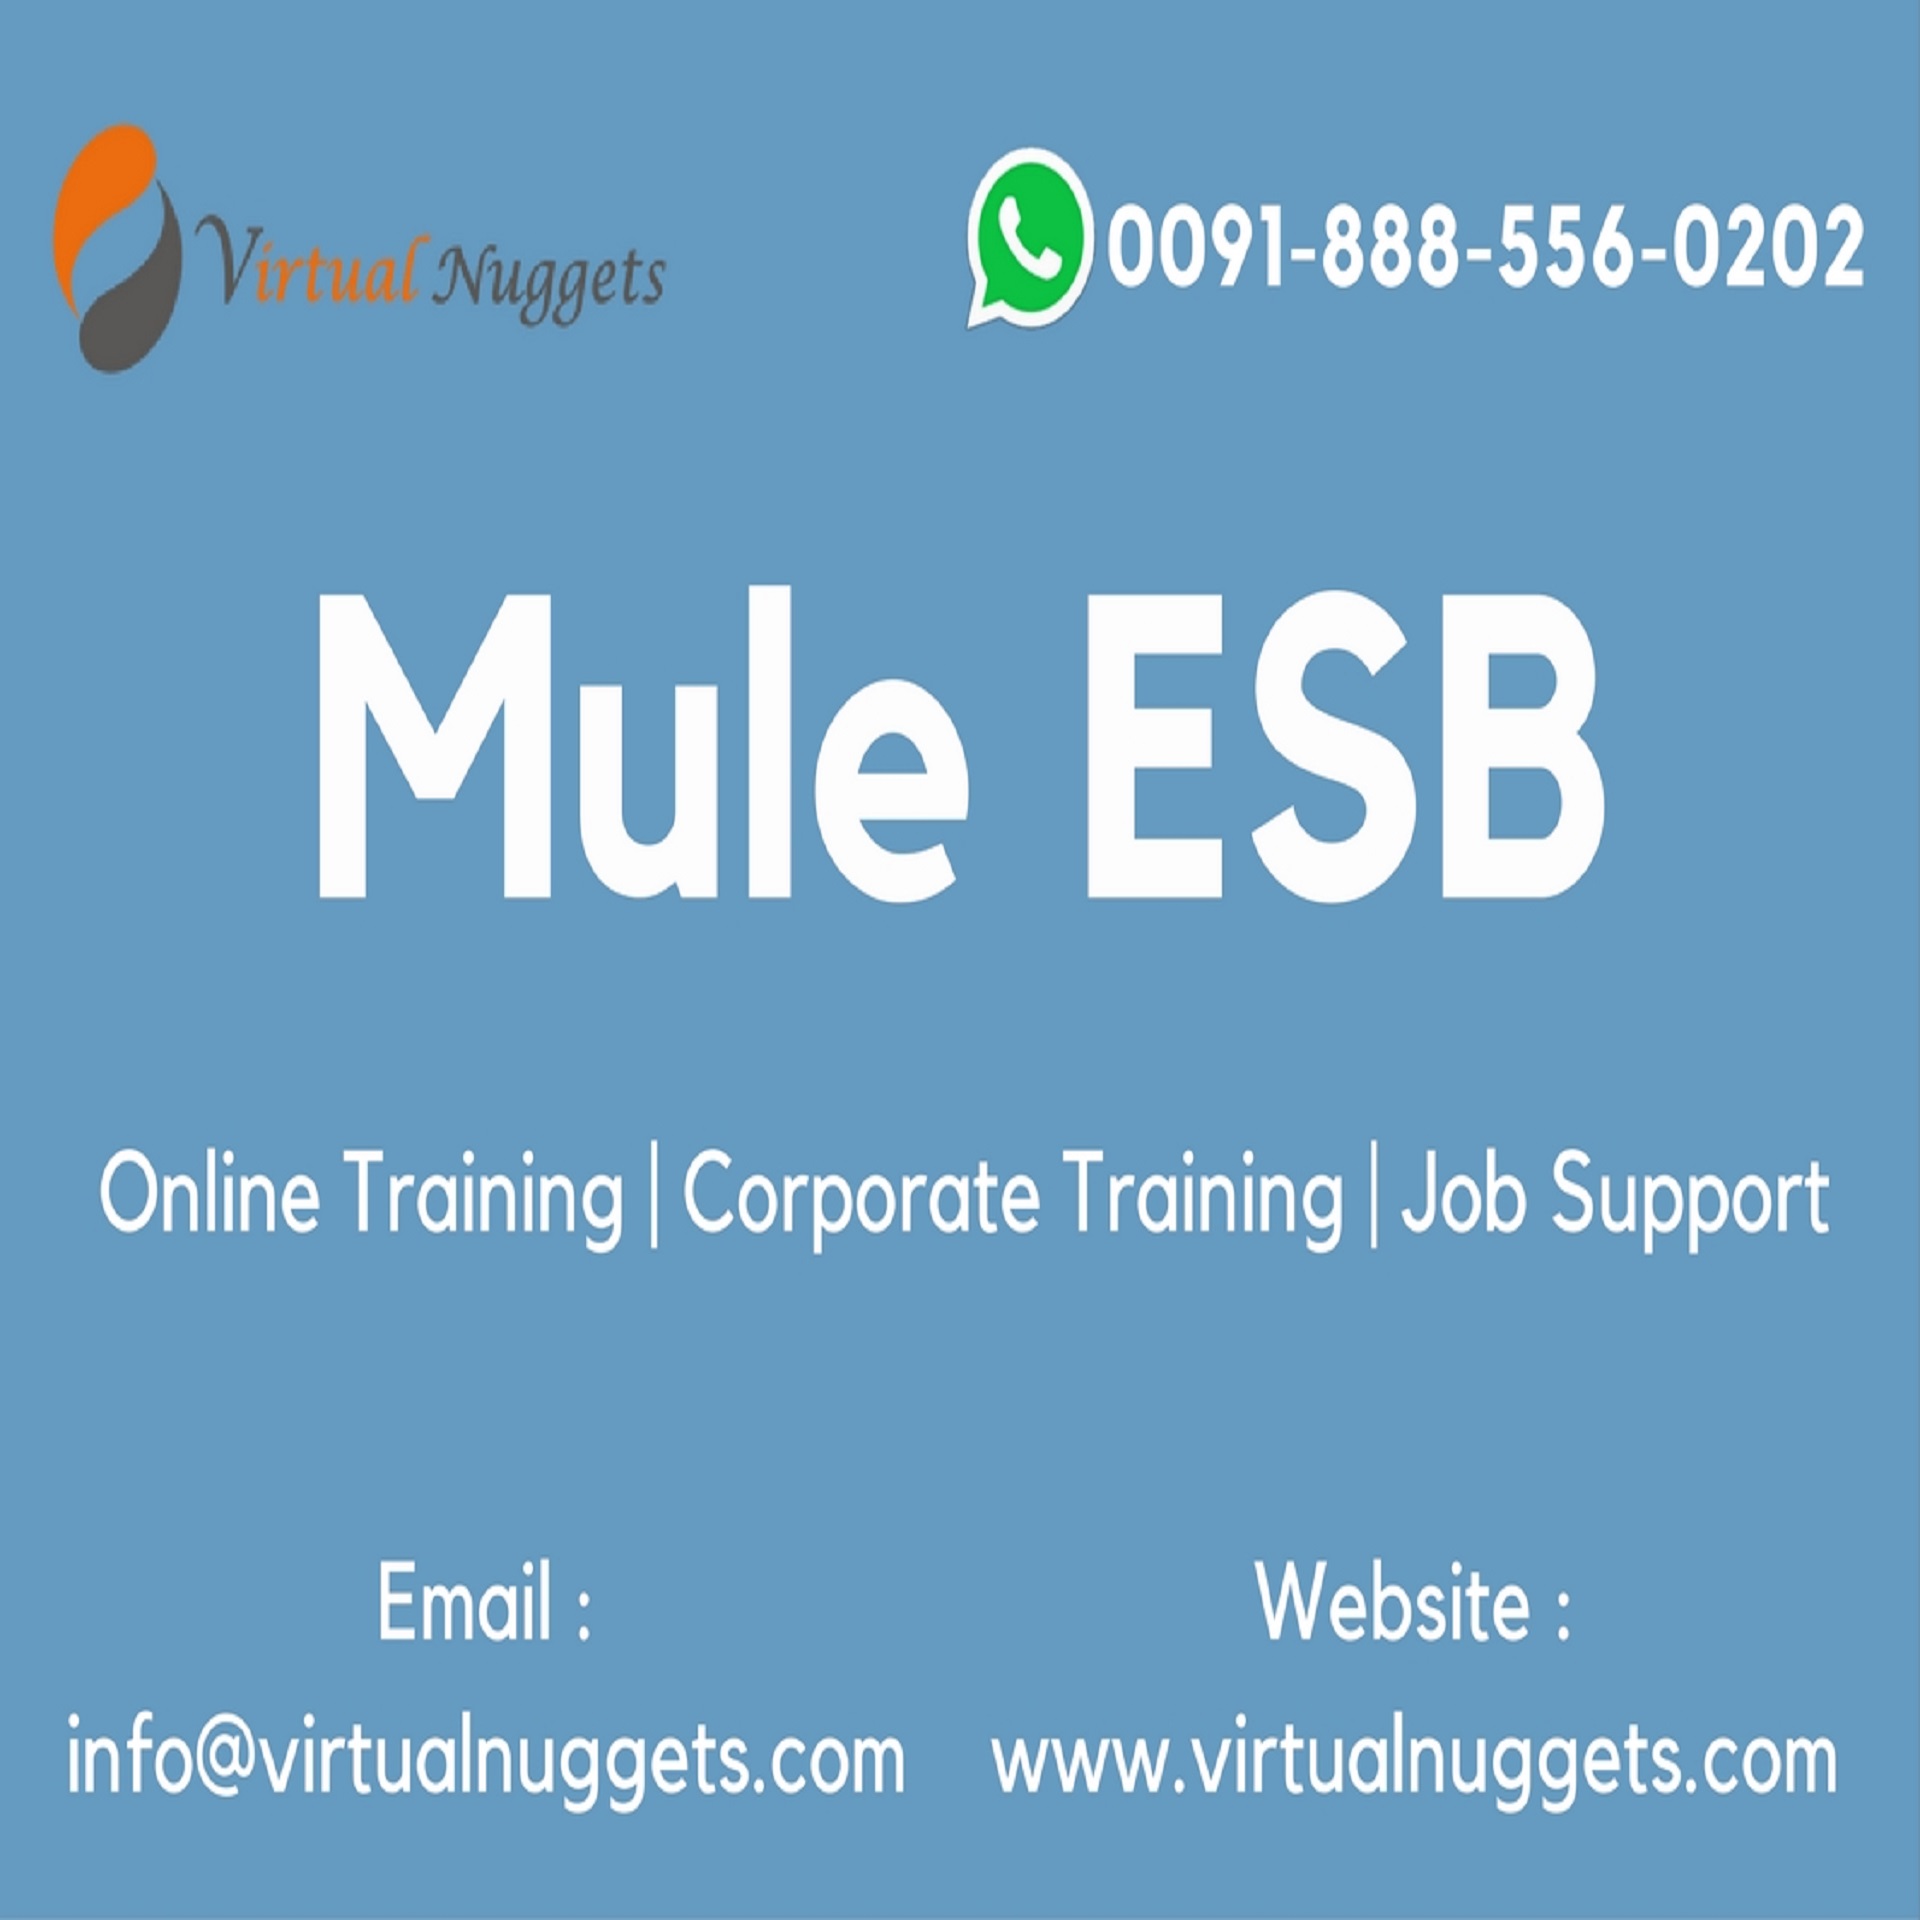 Mule ESB Online Training, Metropolitan Adelaide, New South Wales, Australia